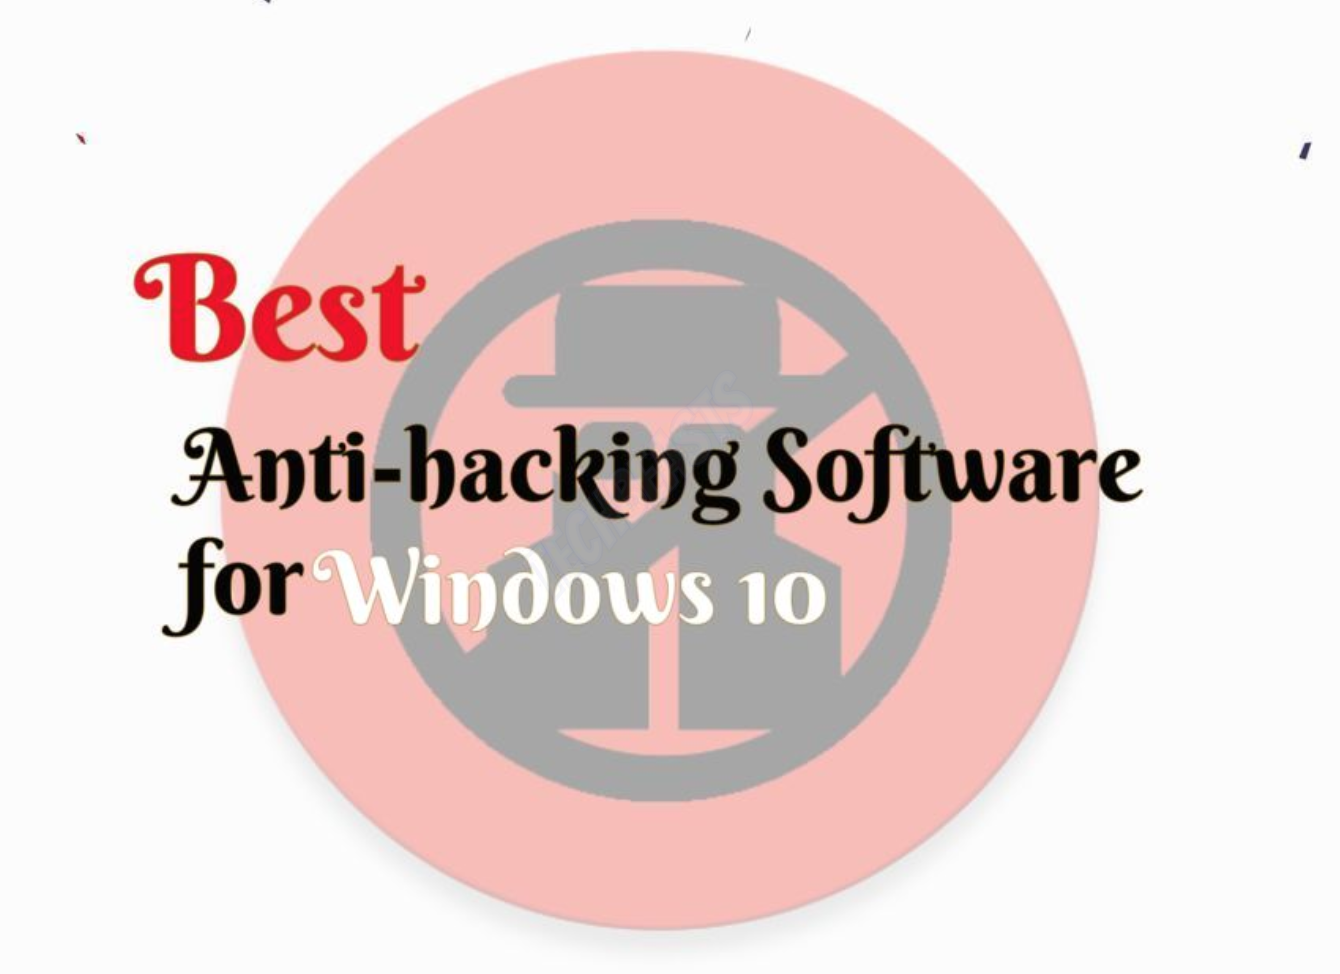 Best Anti-hacking Software